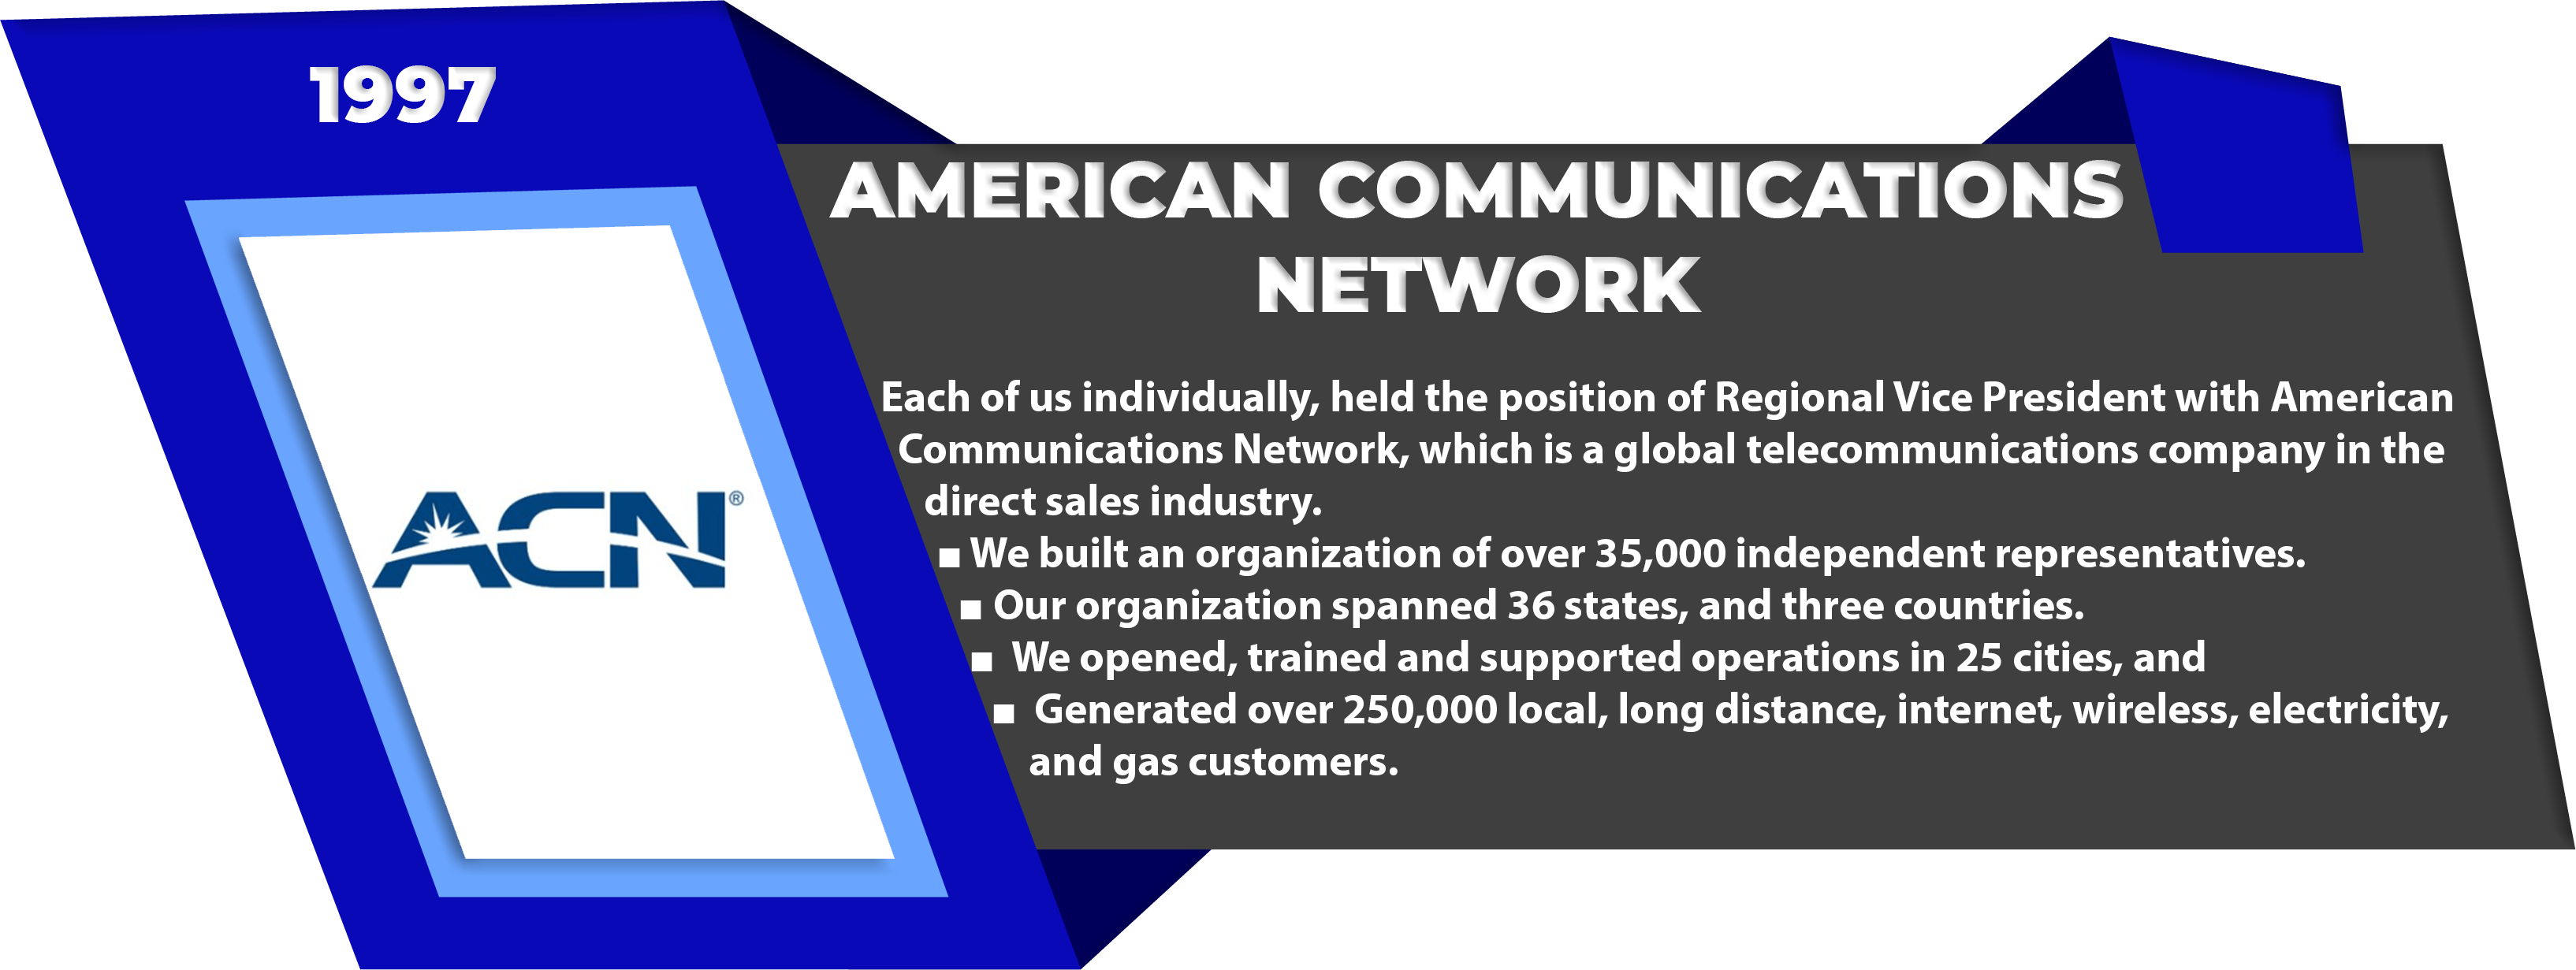 American-Communications-Network-1997-–-2003-1